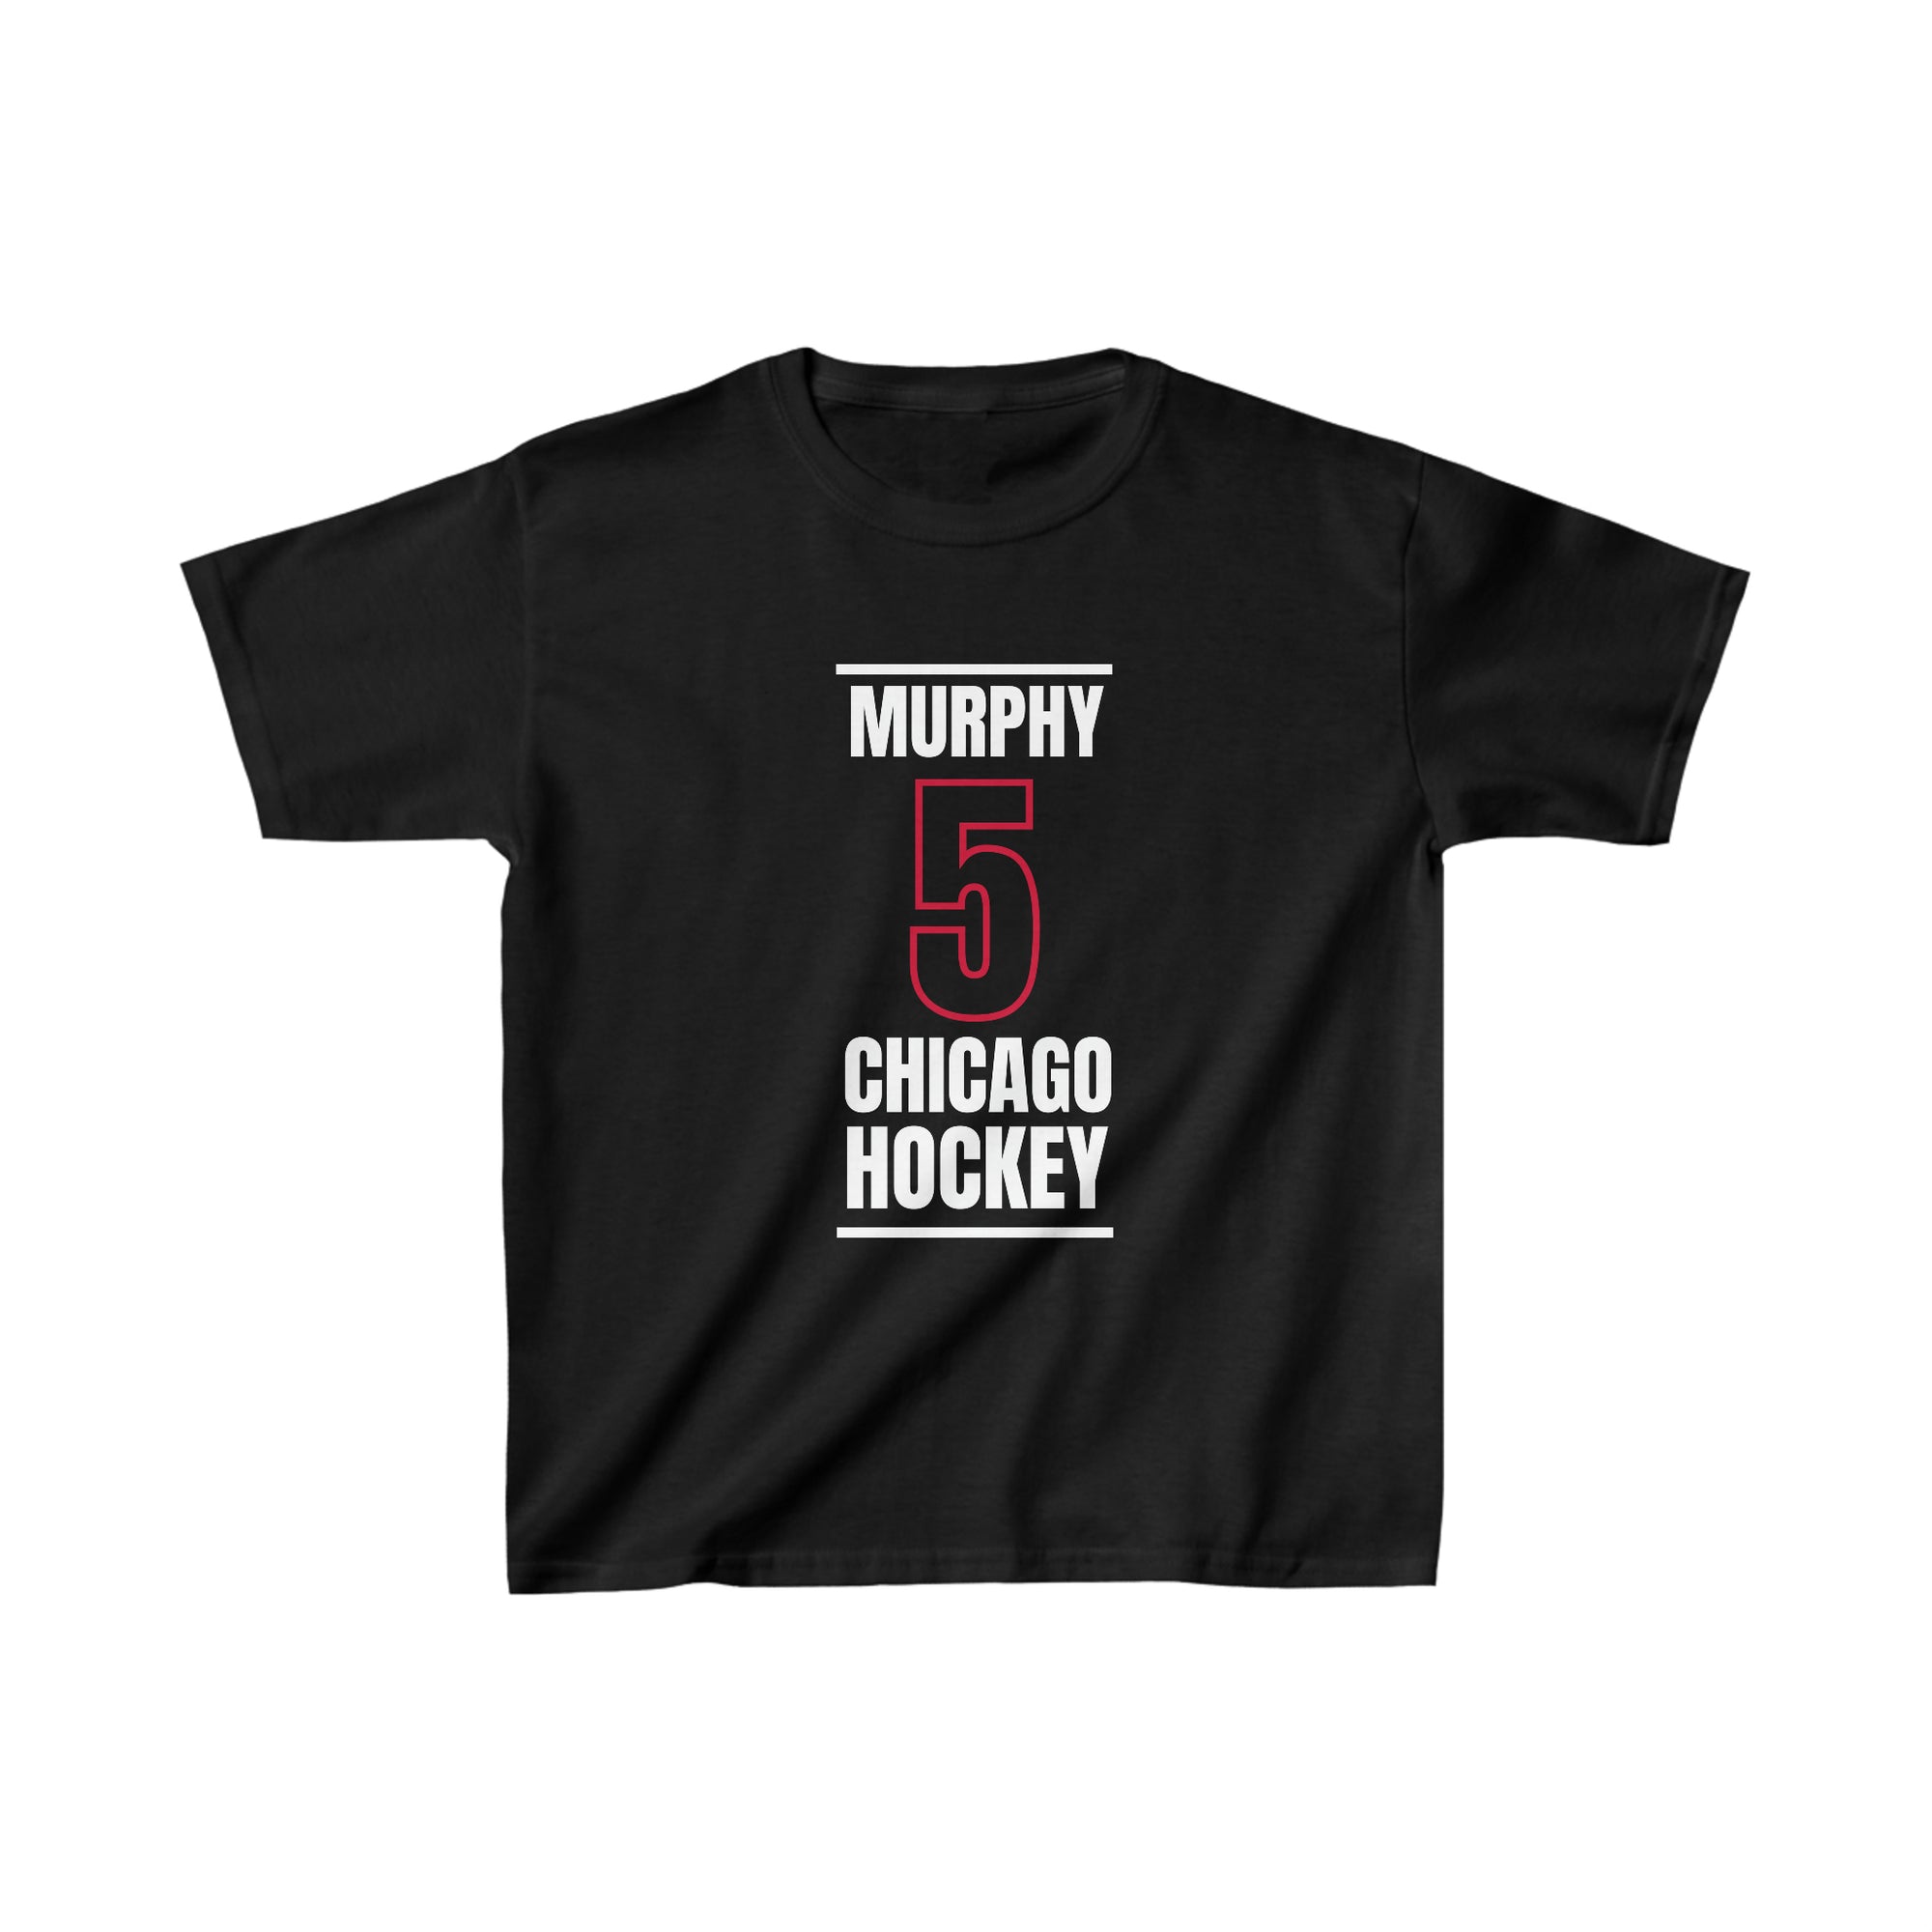 Murphy 5 Chicago Hockey Black Vertical Design Kids Tee